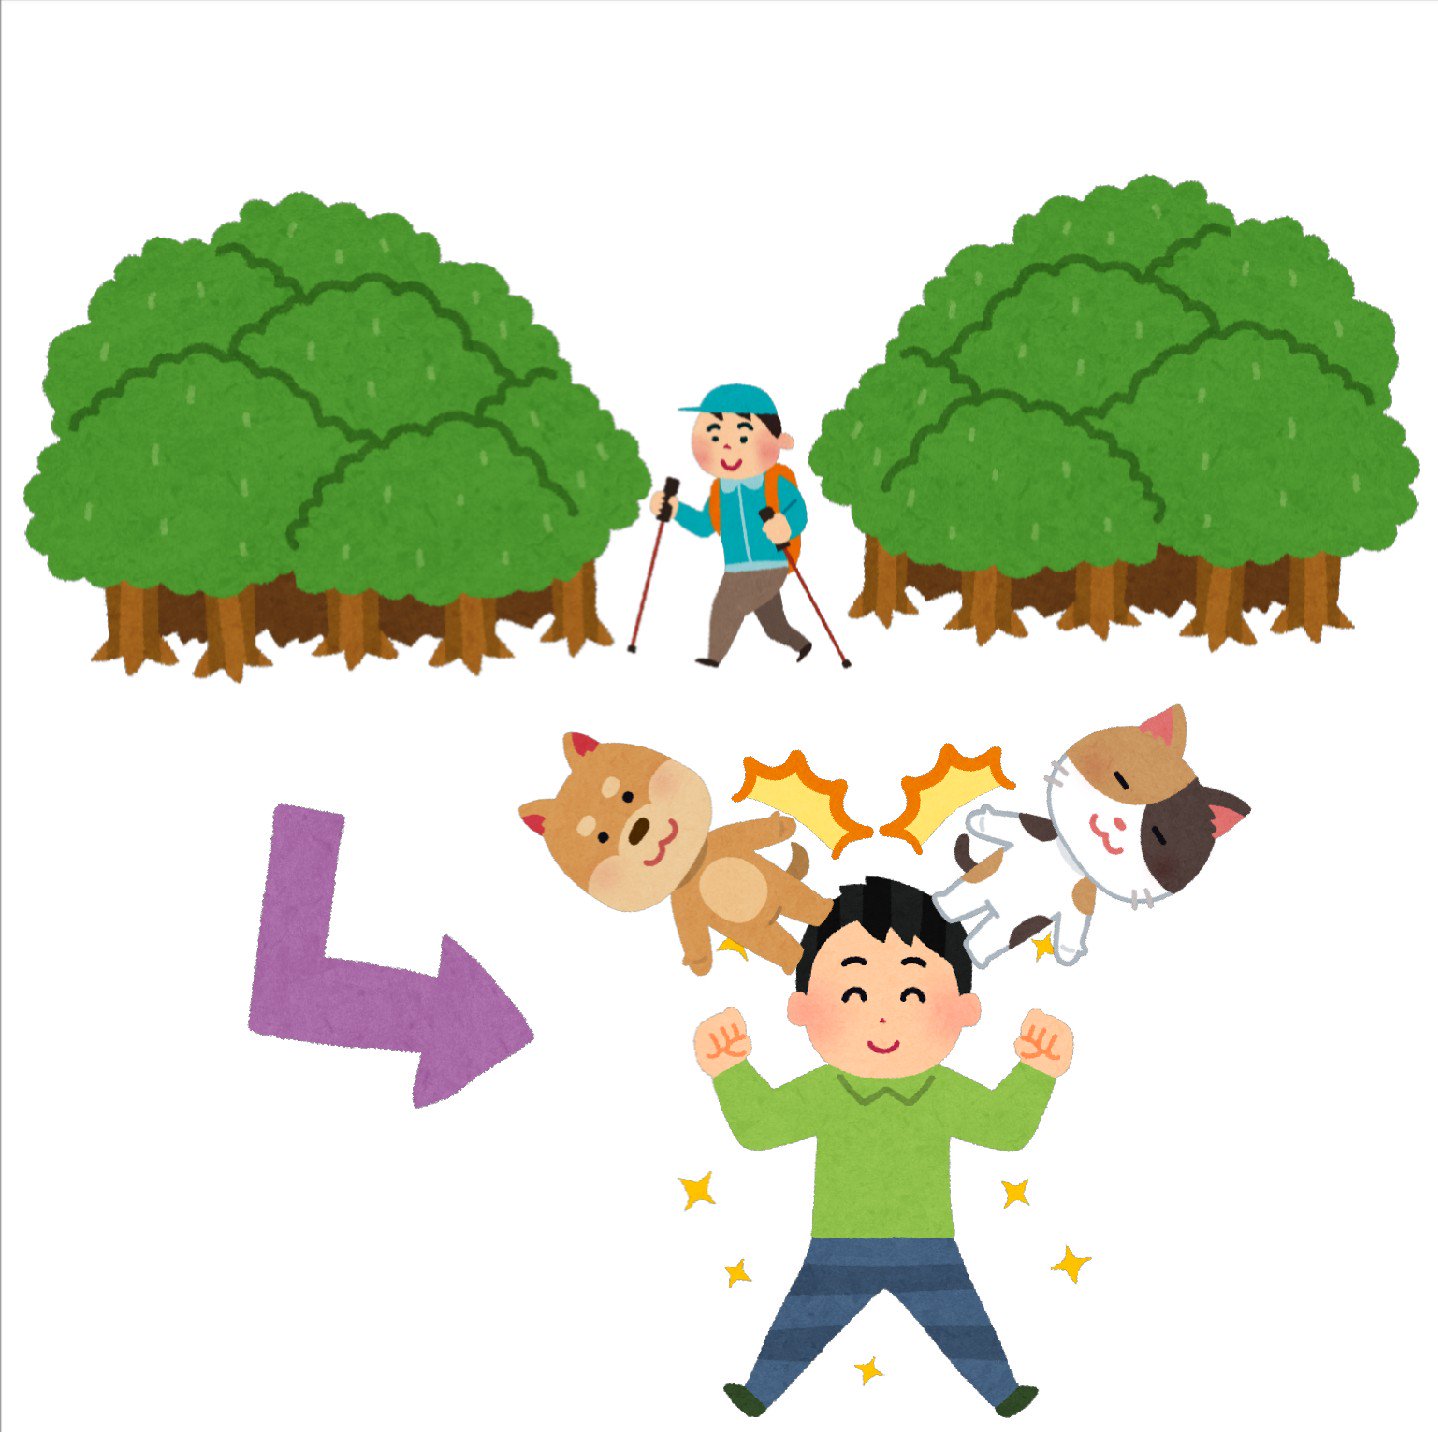 Twitter 上的 まいチクをいらすとやで再現 Dayukoume 再現難易度 使ったイラスト 7枚 森のイラスト ノルディックウォーキングの イラスト 矢印のイラスト 直角 元気な男性のイラスト 犬のキャラクターのイラスト 猫のキャラクターのイラスト 漫符のイラスト 驚いた